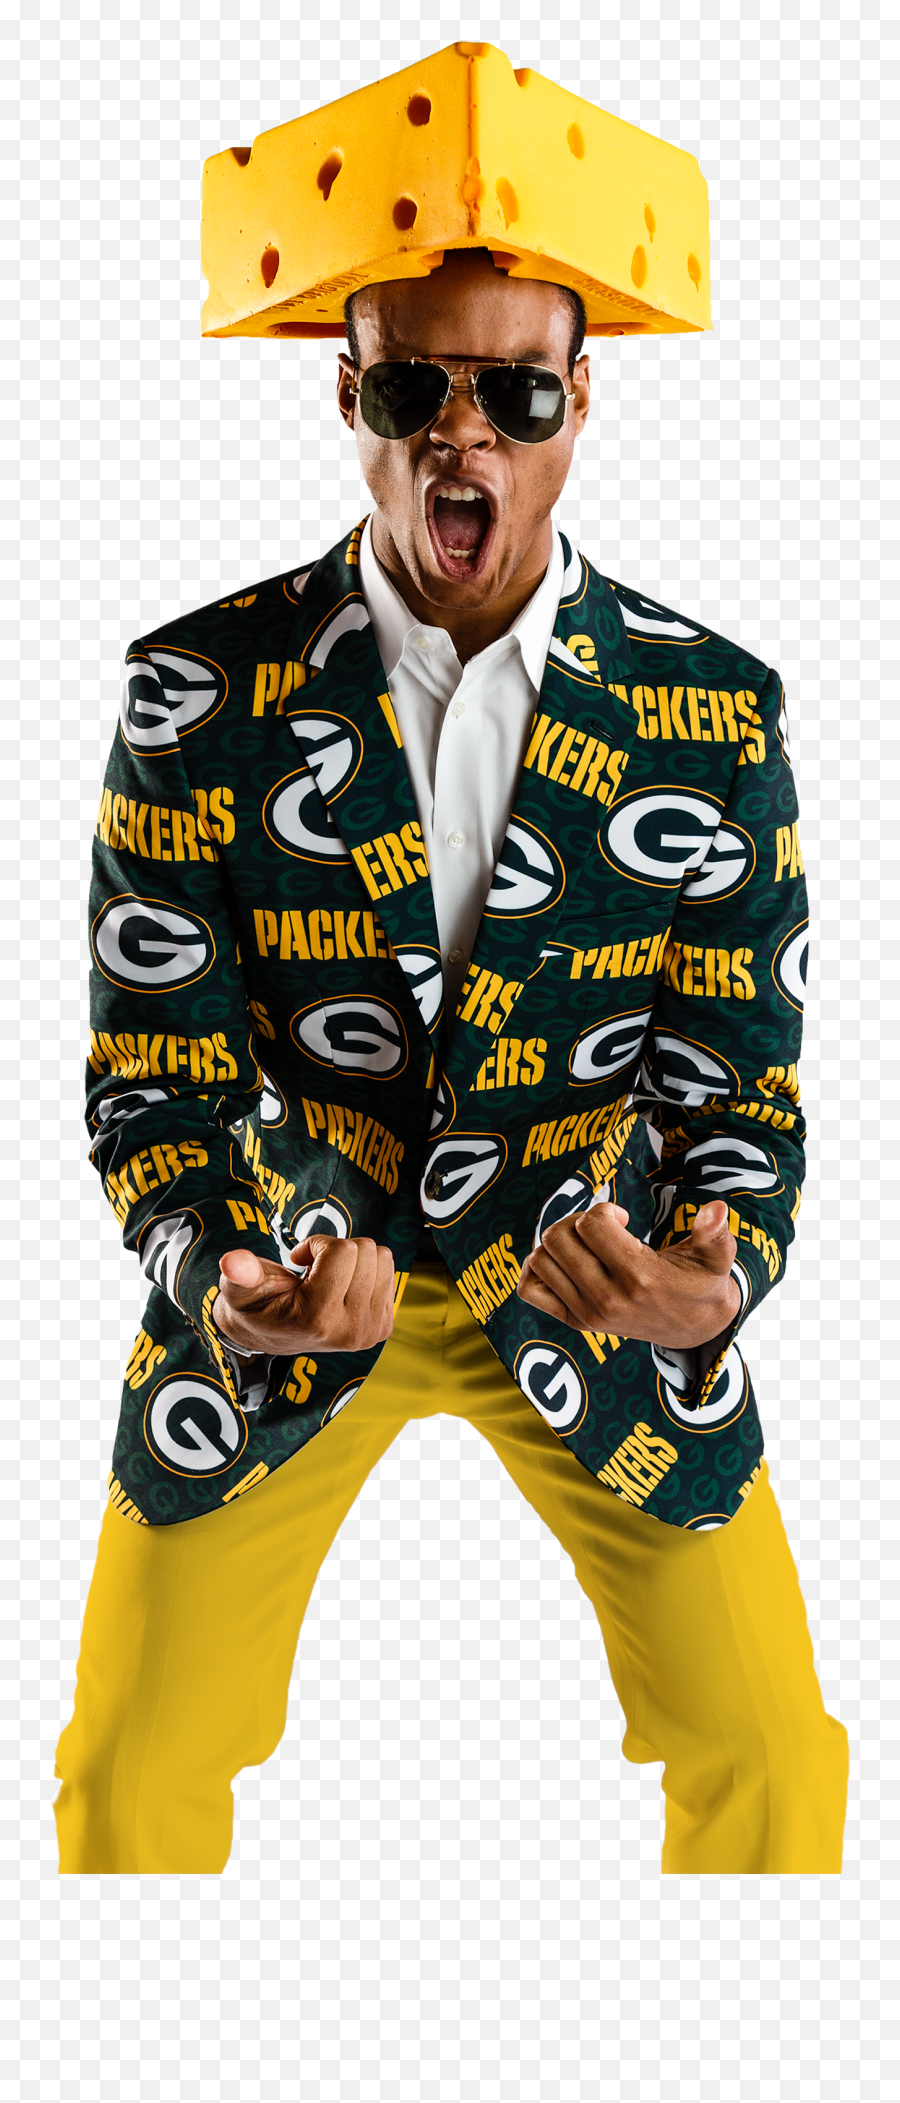 Green Bay Packers Nfl Gameday Blazer - Green Bay Packers Suit Emoji,Green Bay Packer Logo